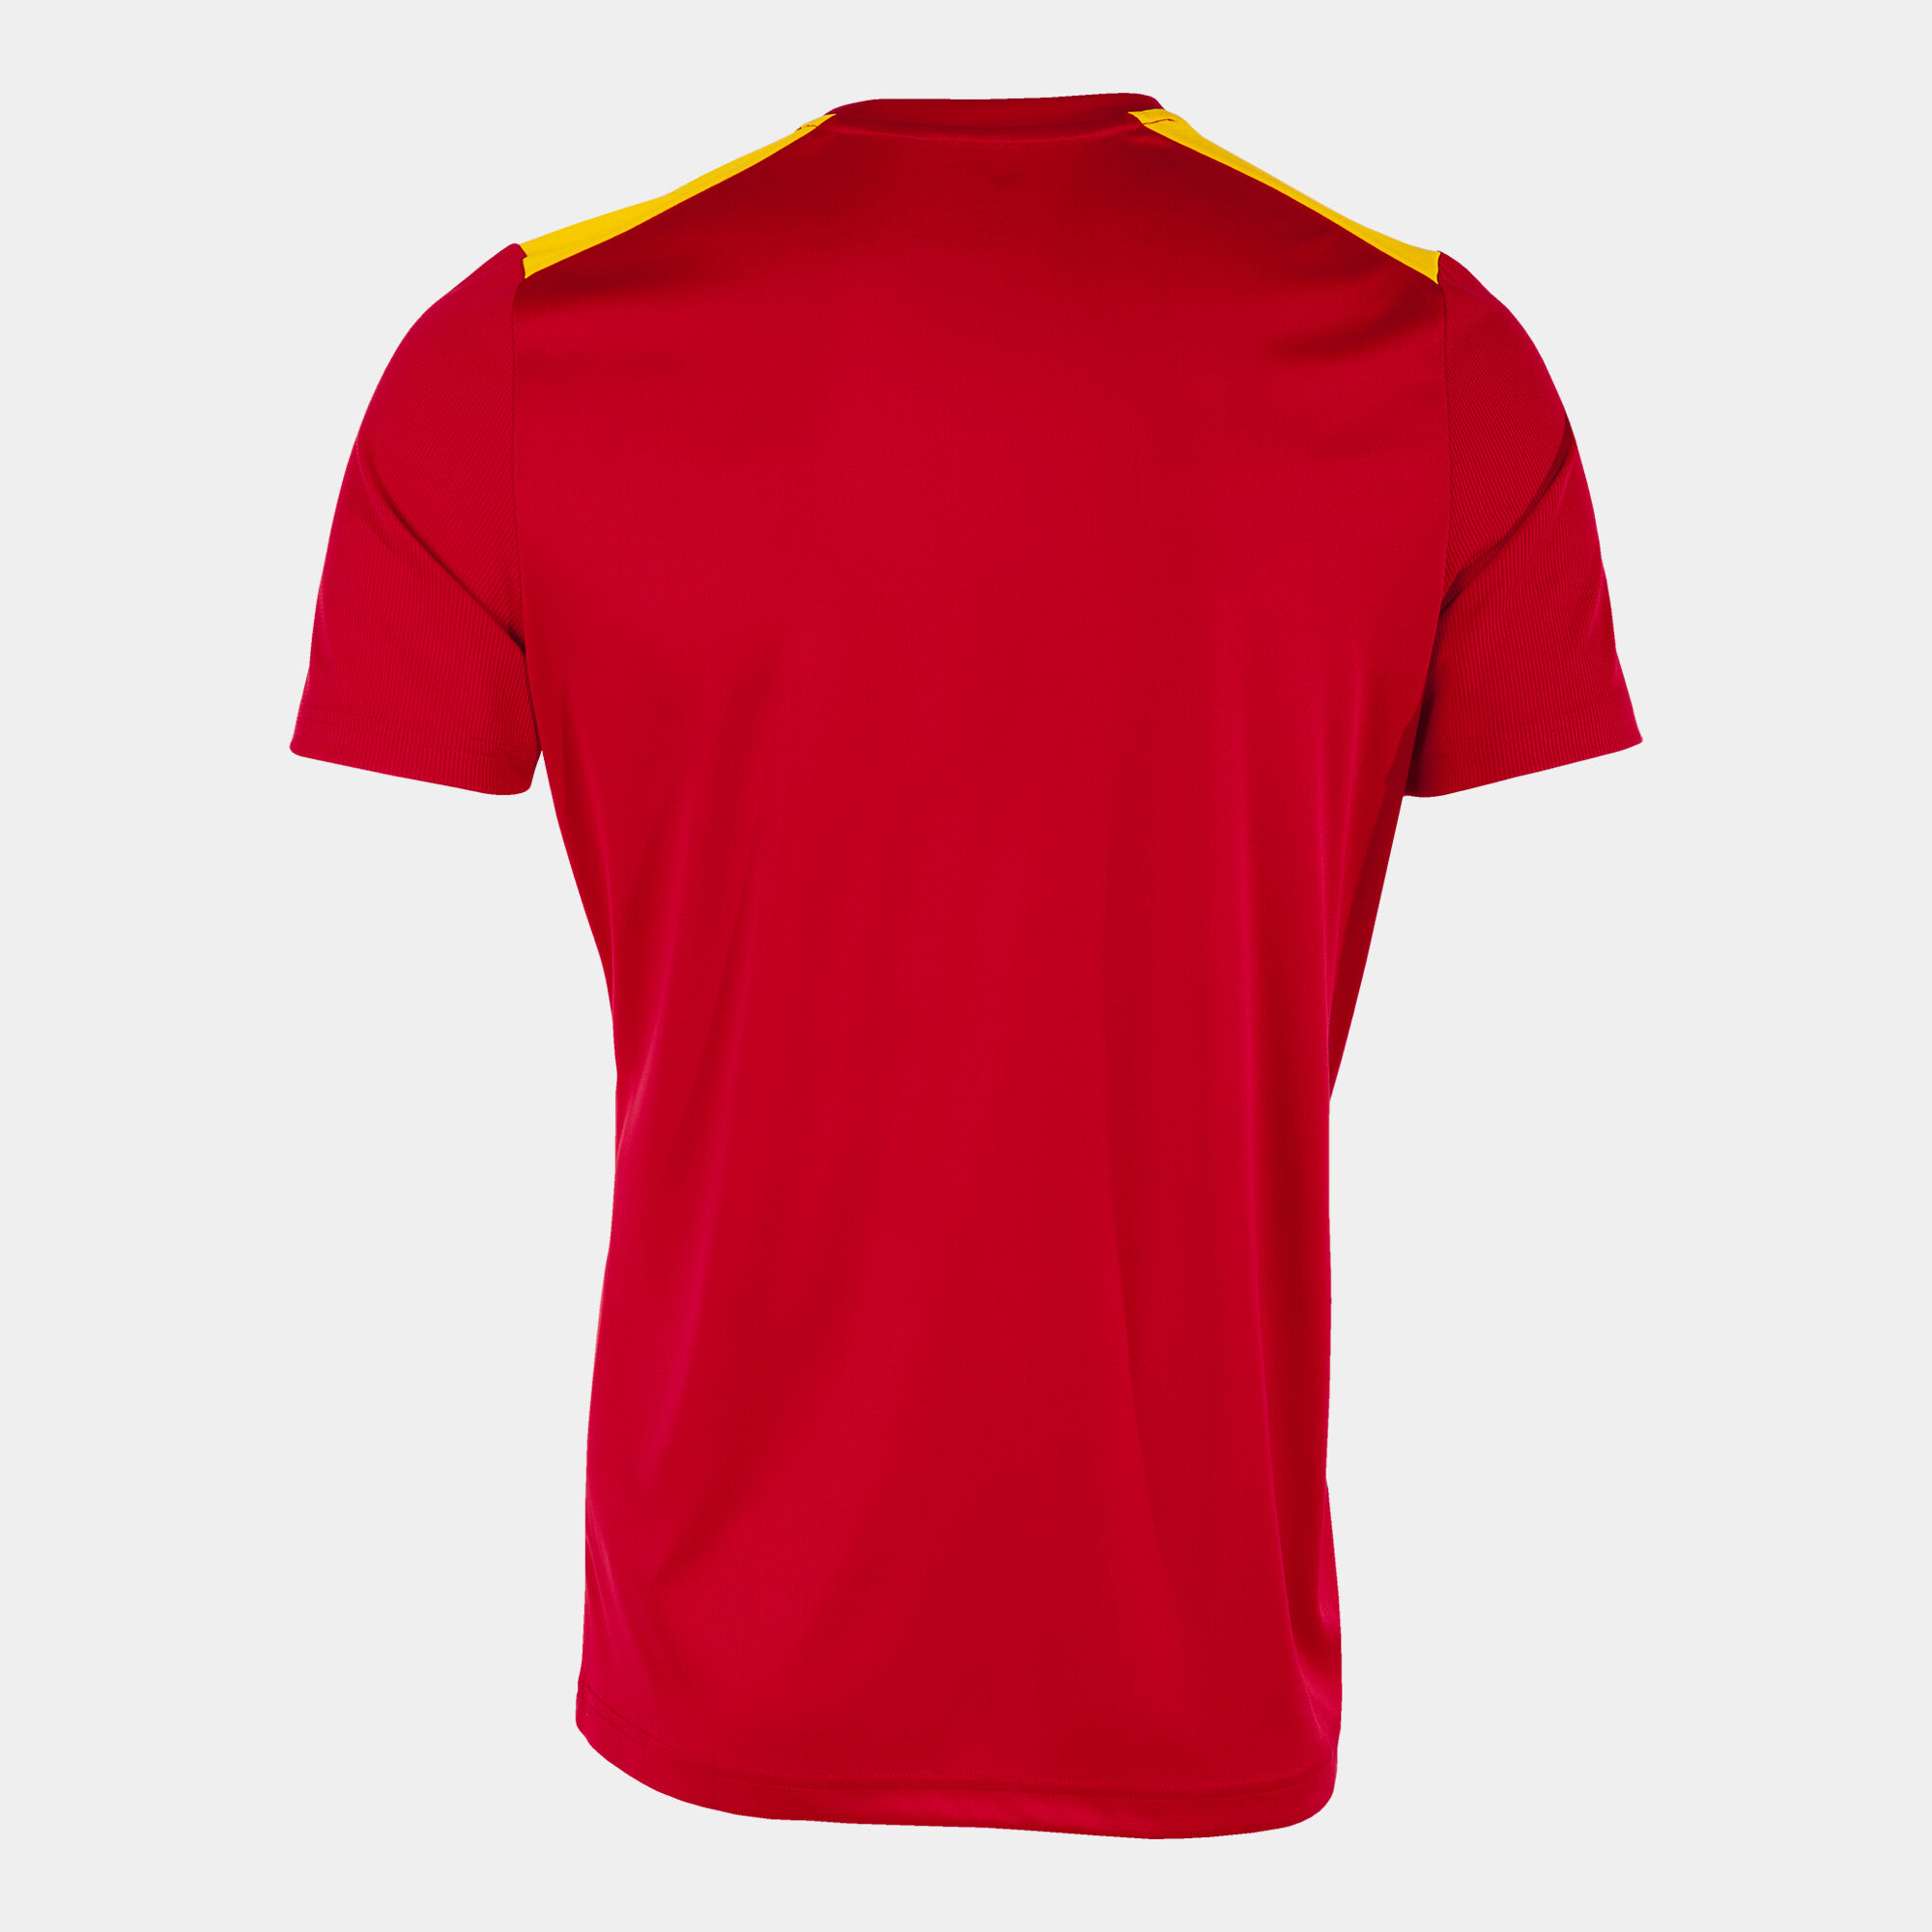 Camiseta manga corta hombre Championship VII rojo amarillo